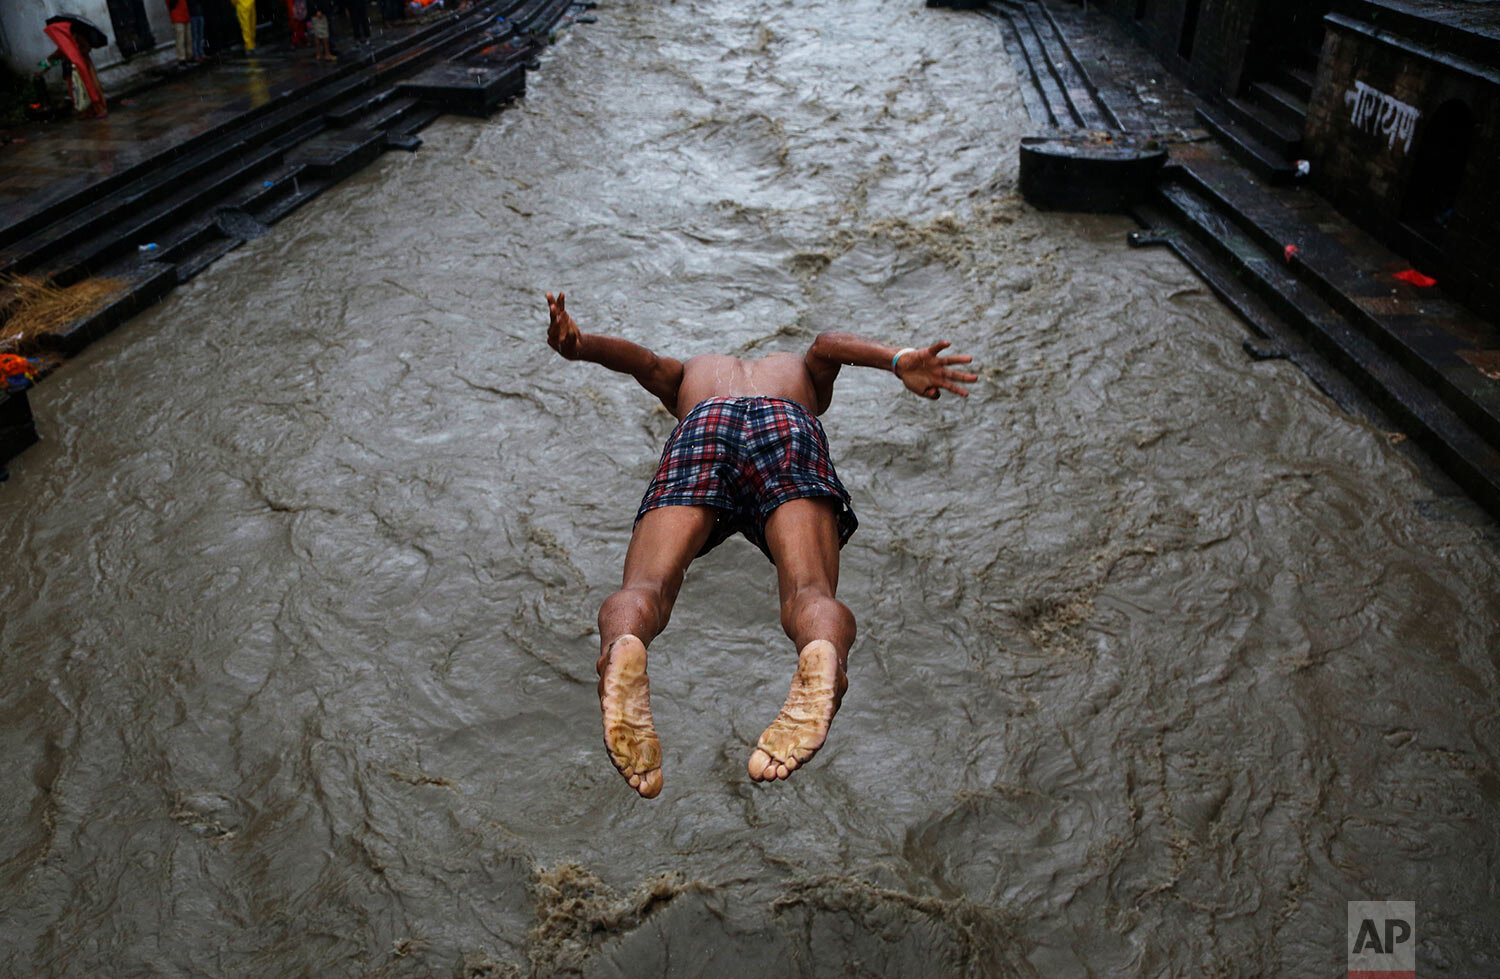  A Nepalese man jumps into the Bagmati river during monsoon rains in Kathmandu, Nepal, Monday, July 20, 2020.  (AP Photo/NIranjan Shrestha) 